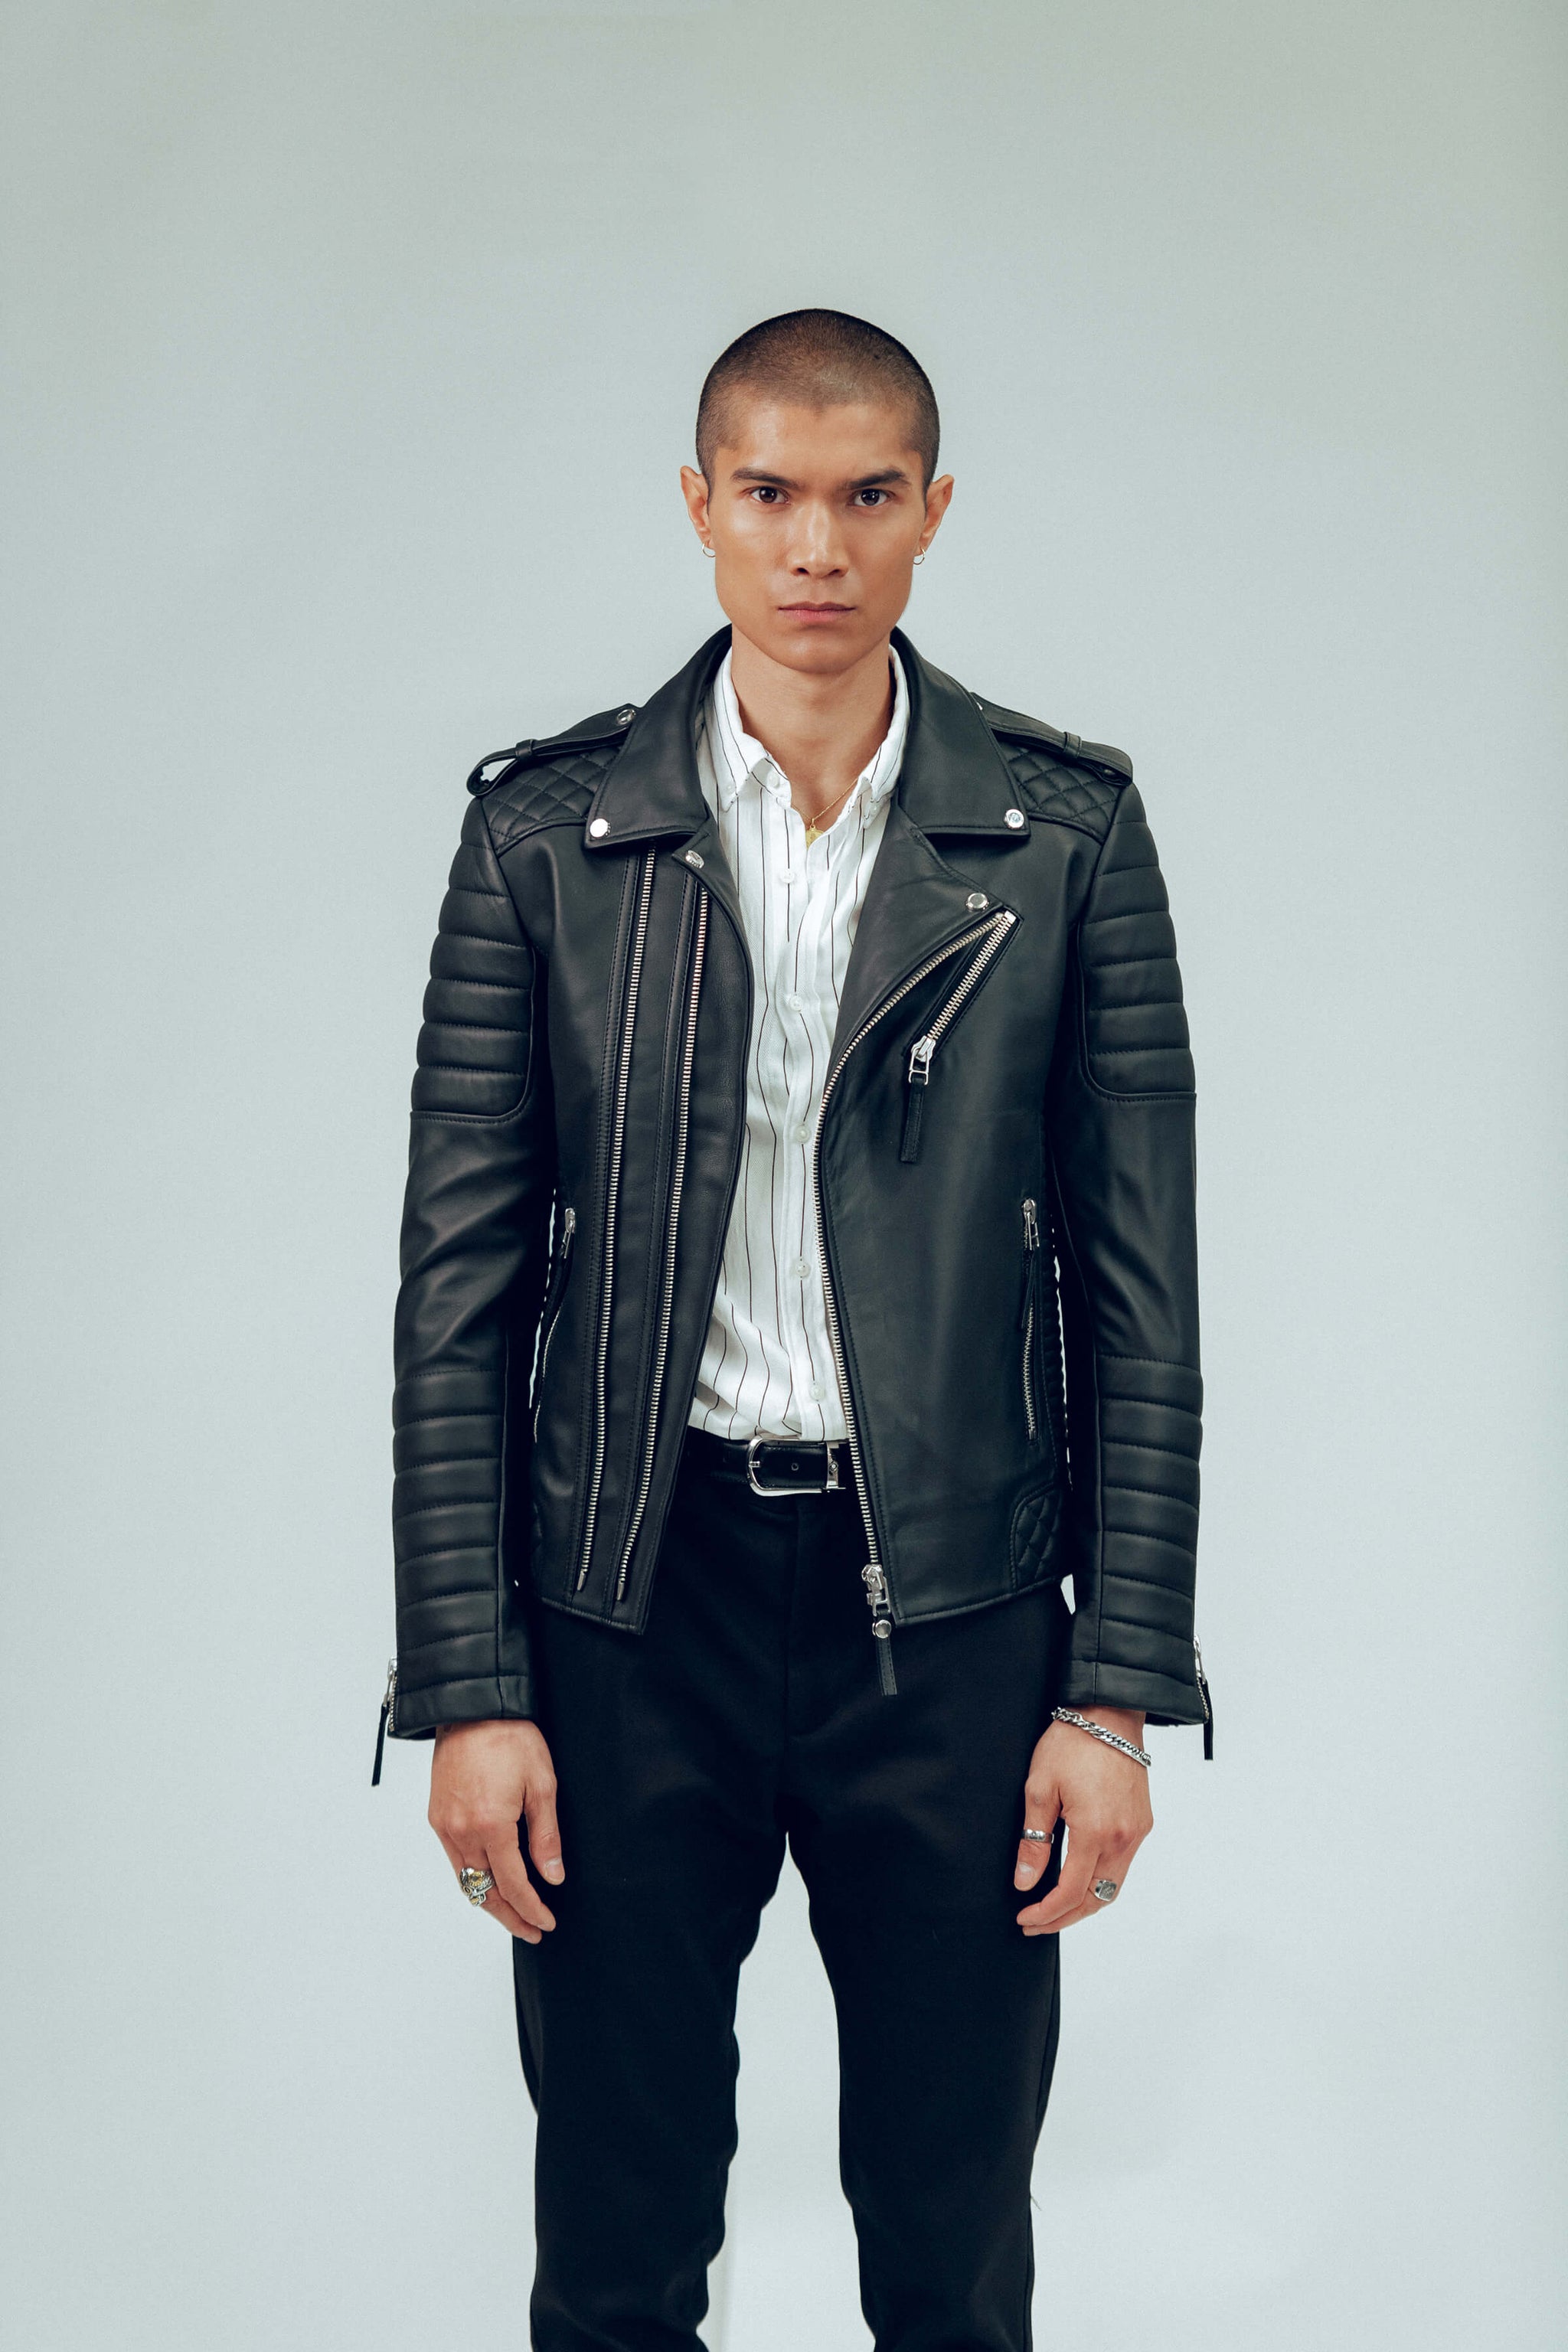 Men's Kay Michaels: Platinum Leather Jacket in Black | BODA SKINS